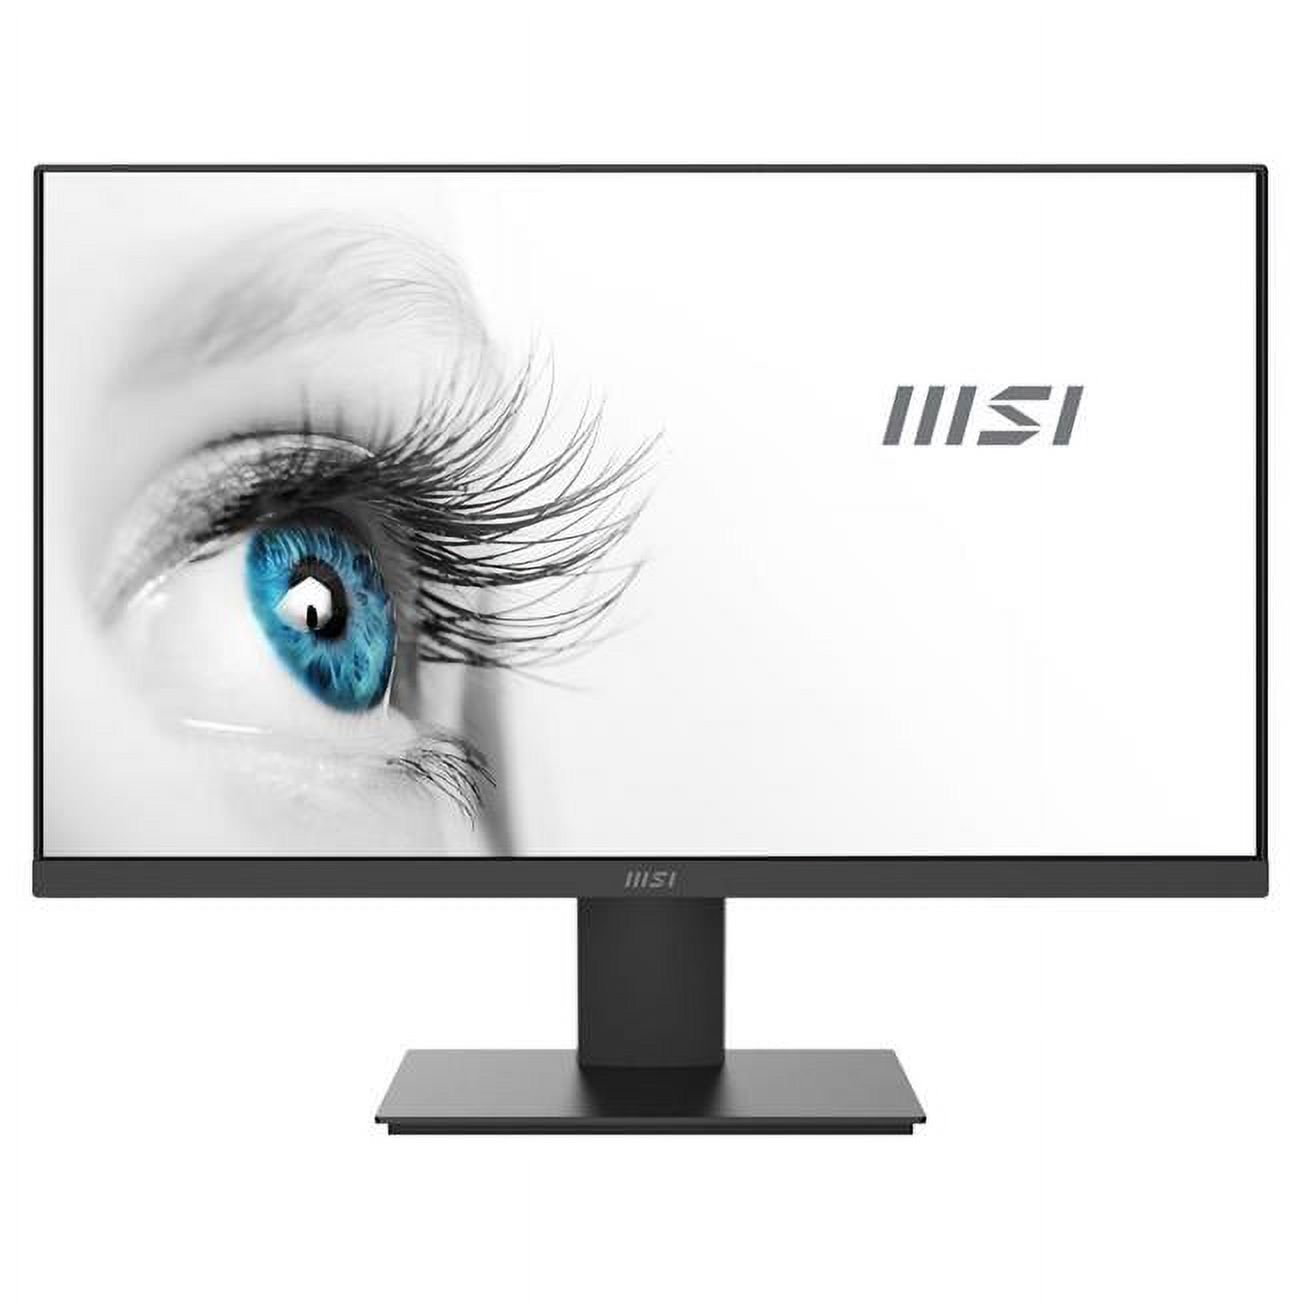 MSI Pro 24 inch Full HD LCD Monitor - 16:9 - MP241X - Black (New) - image 1 of 5